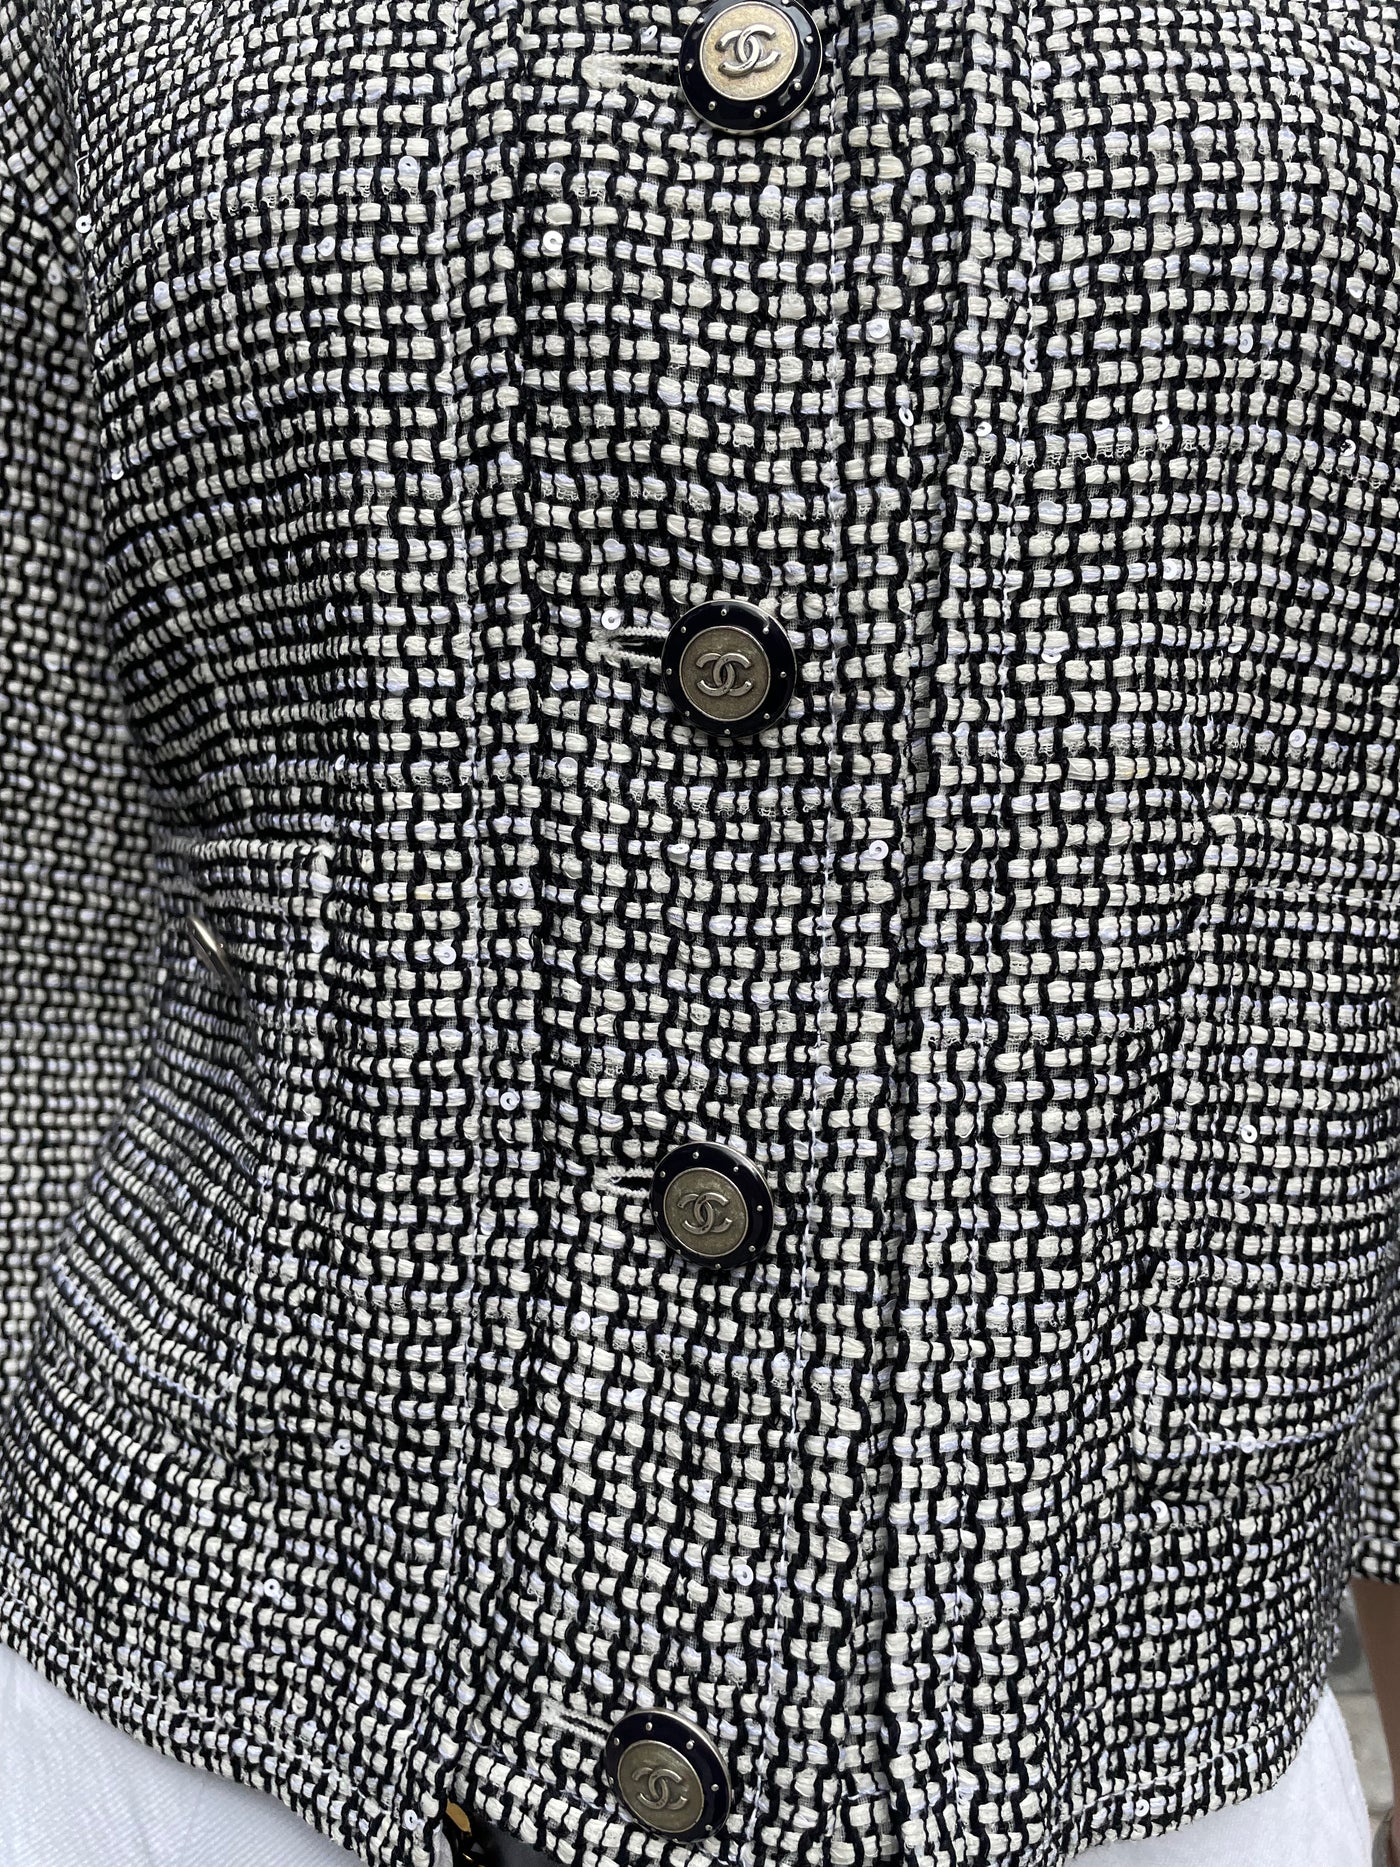 CHANEL sequin black & white evening jacket size 42